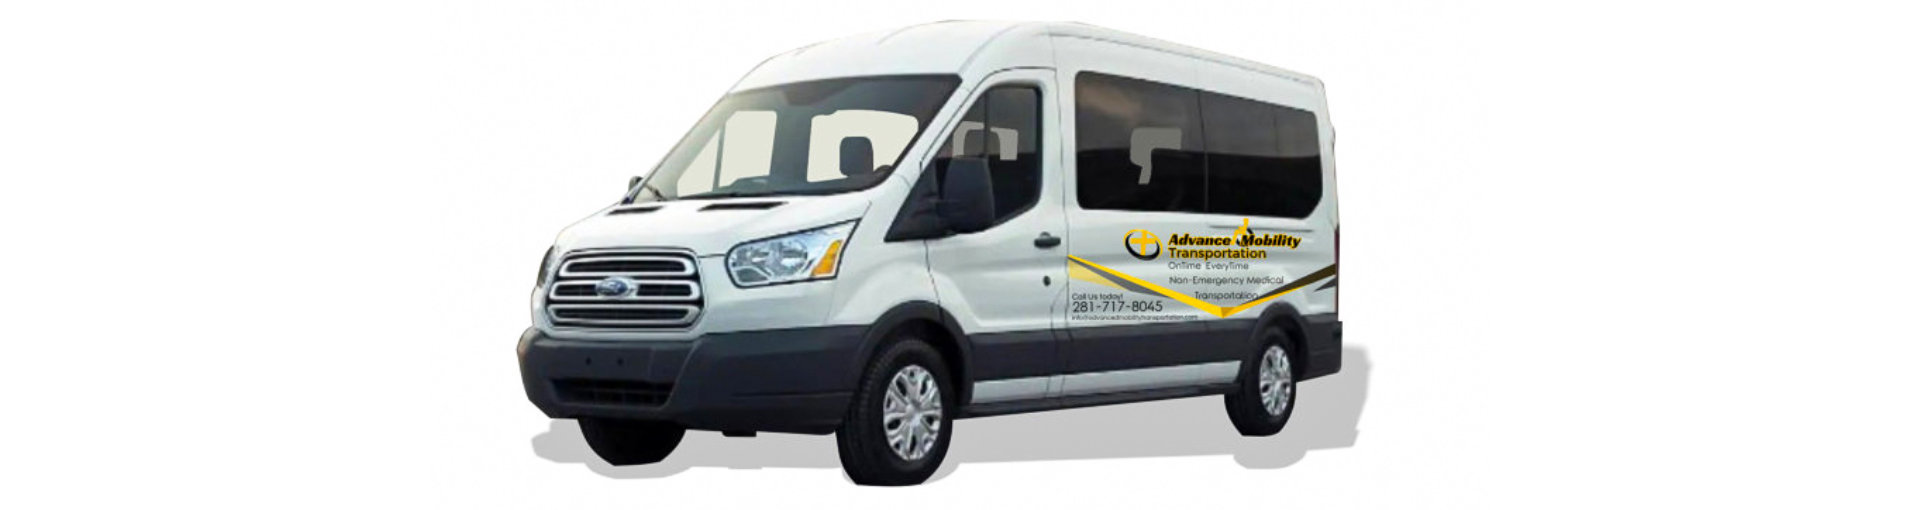 Advance Mobility Transportation van